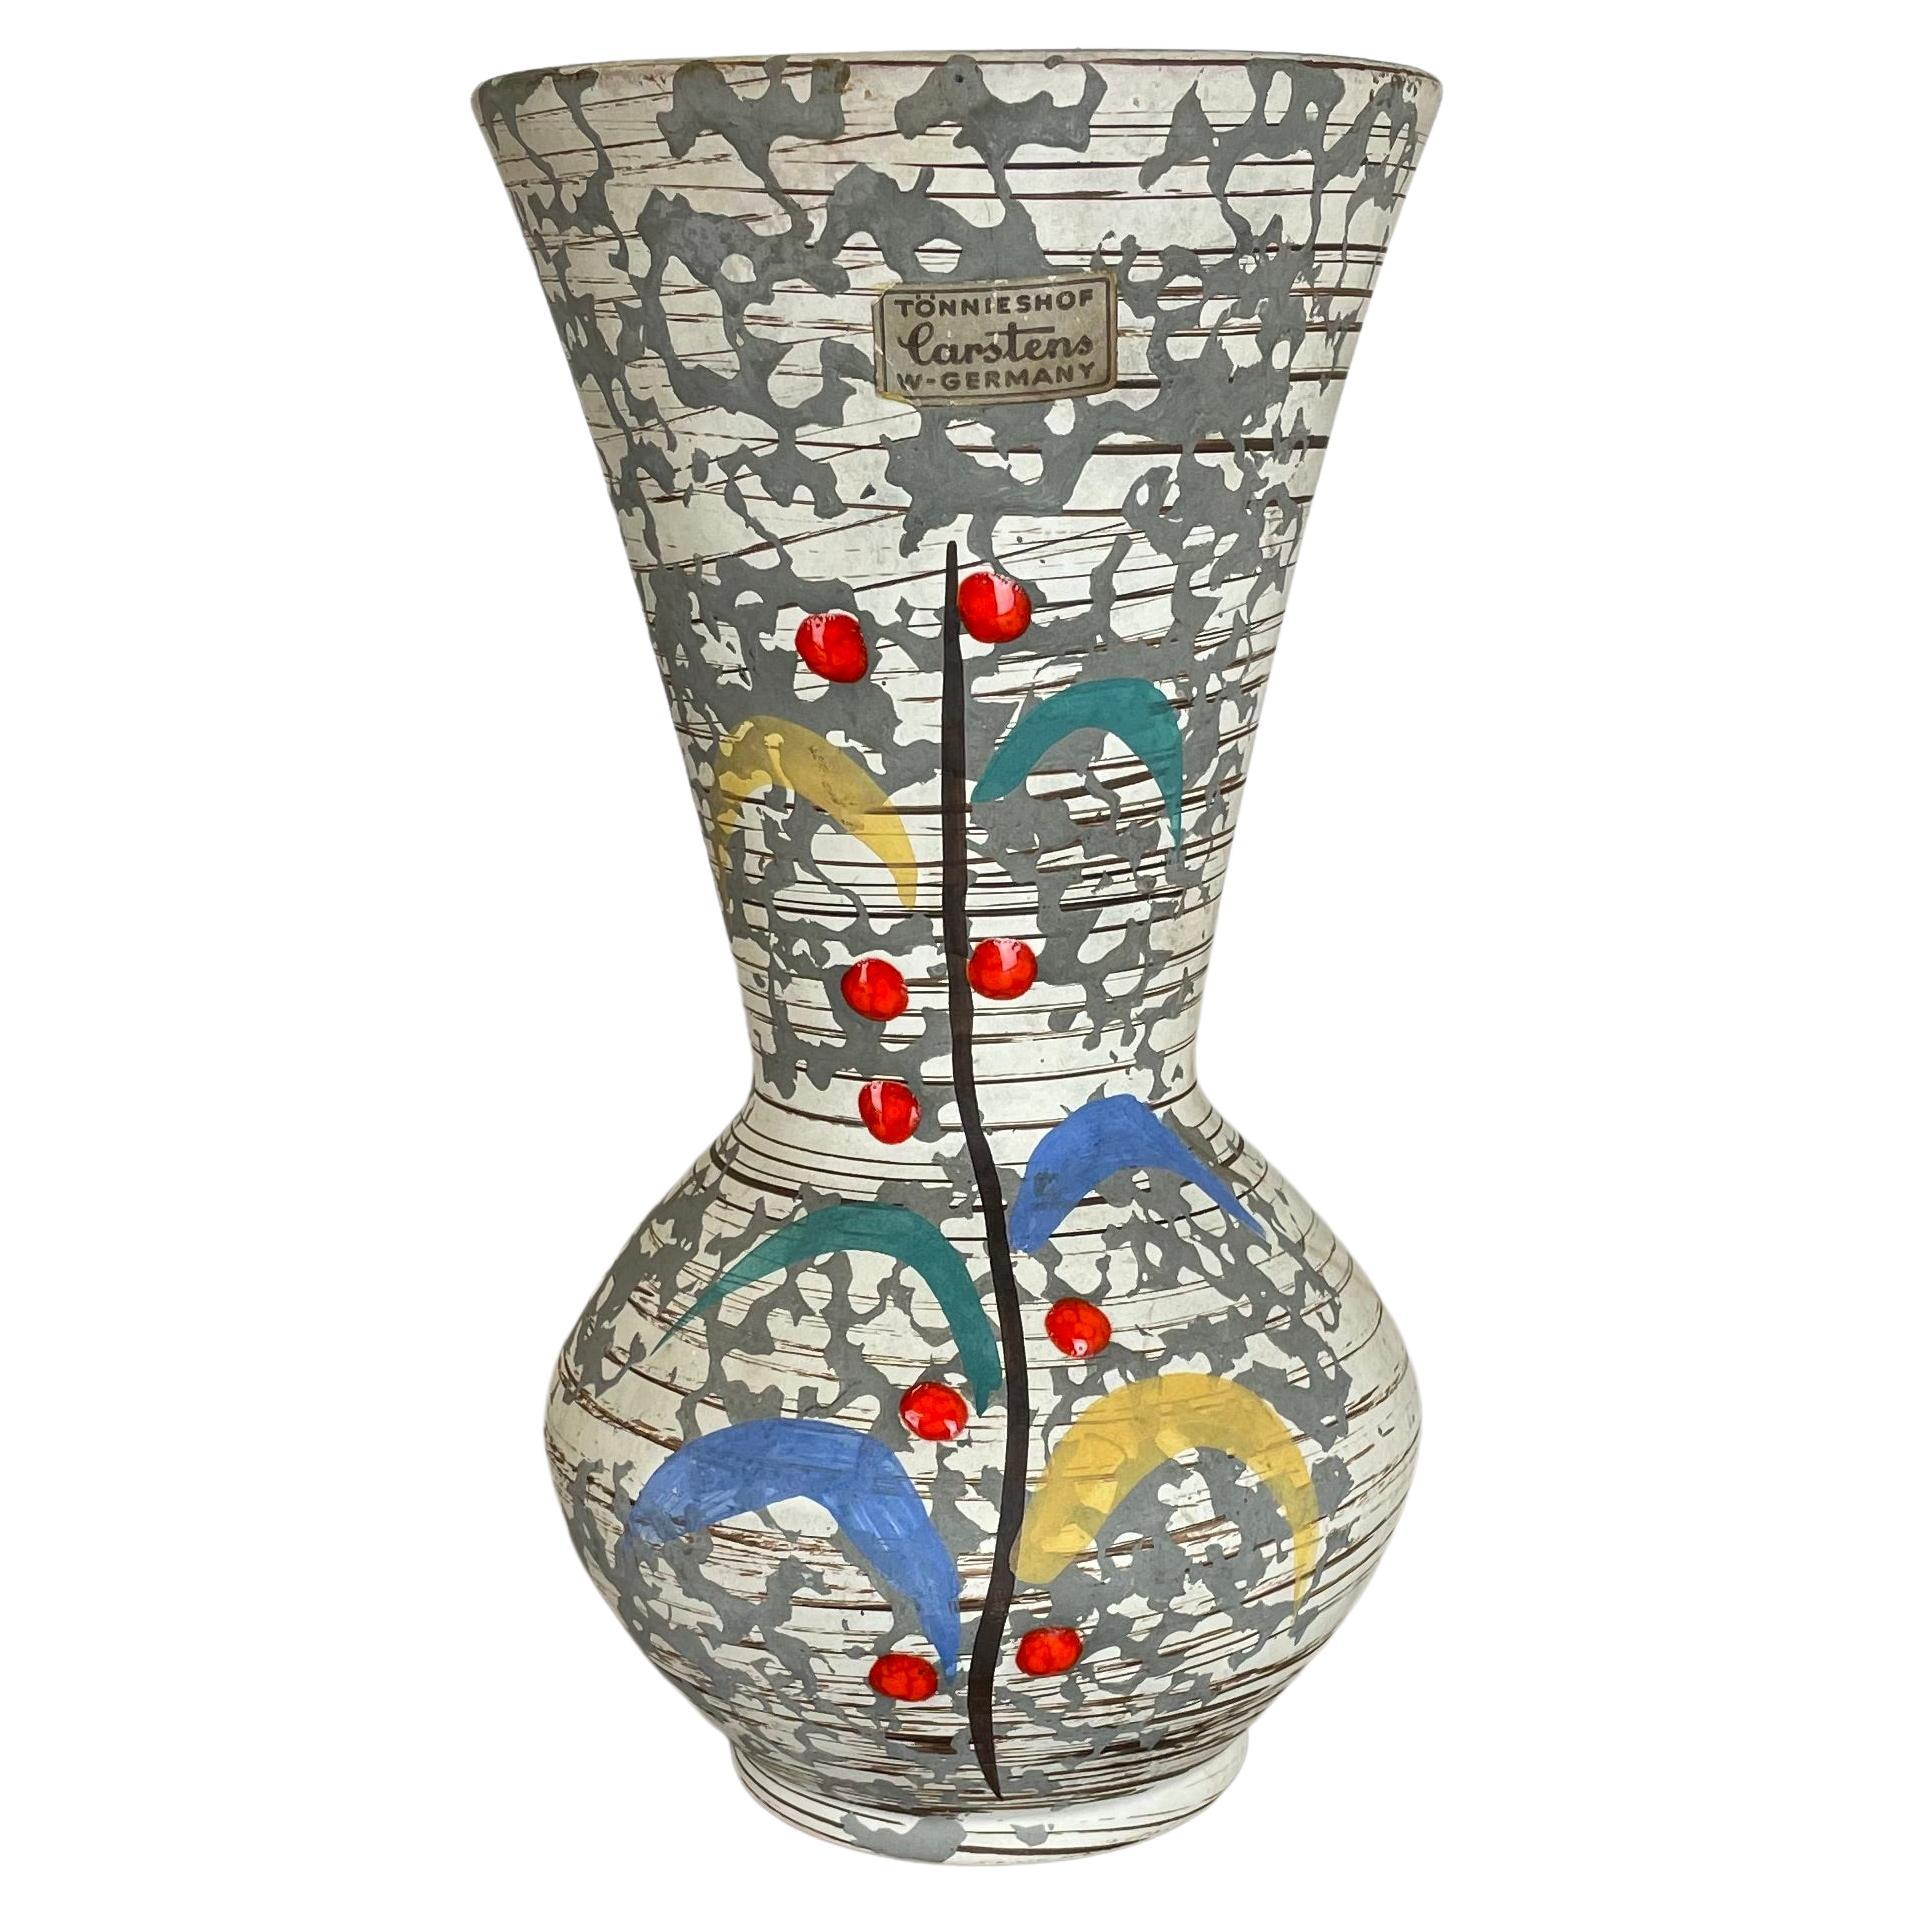 Super Glaze ABSTRACT Ceramic Pottery Vase Carstens Tönnieshof Germany, 1950s For Sale